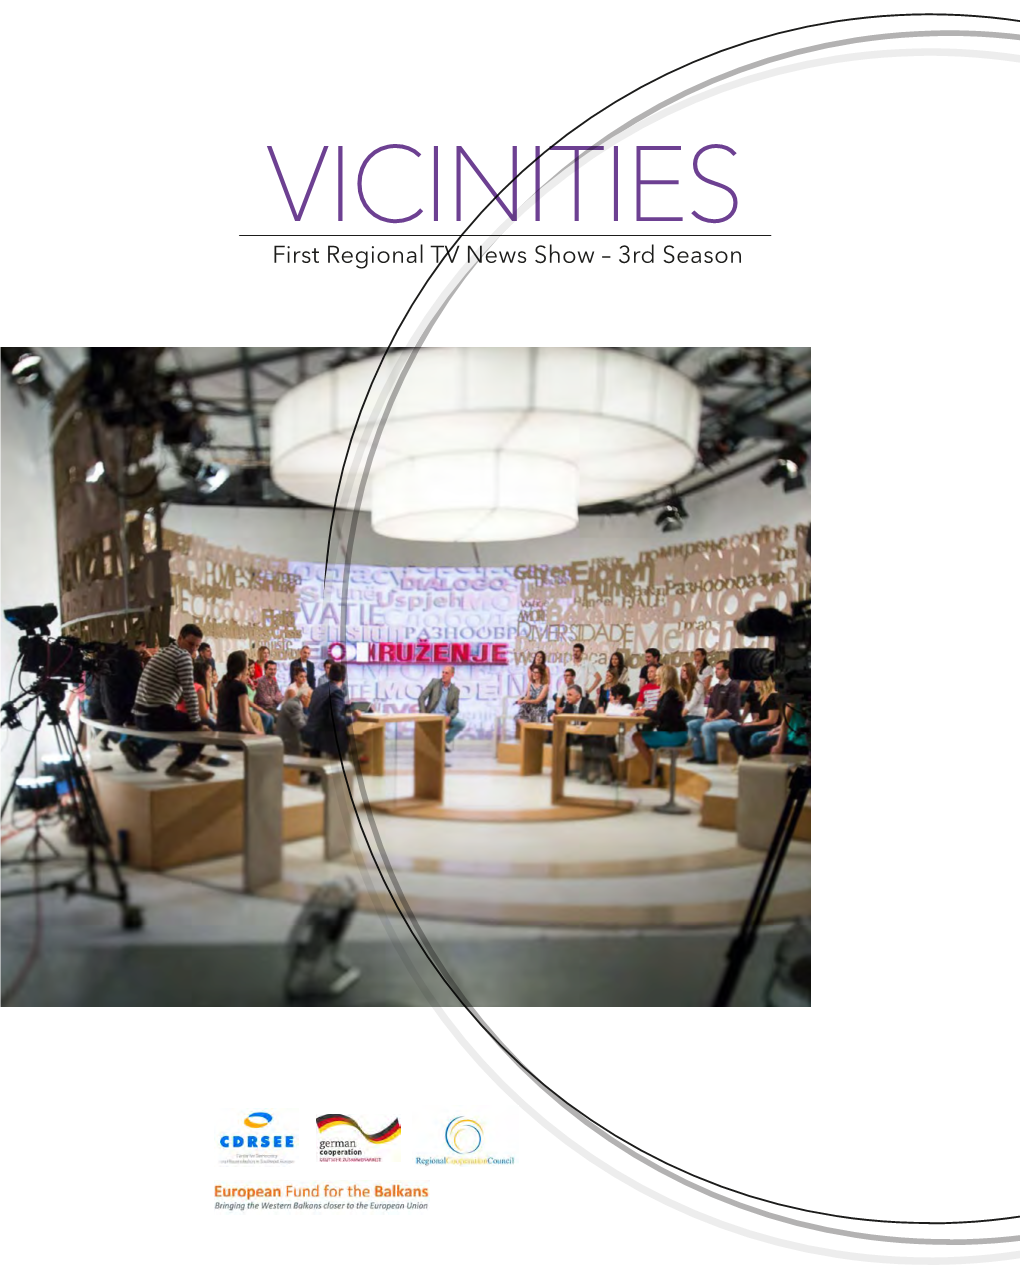 VICINITIES – First Regional TV News Show, 3Rd Season